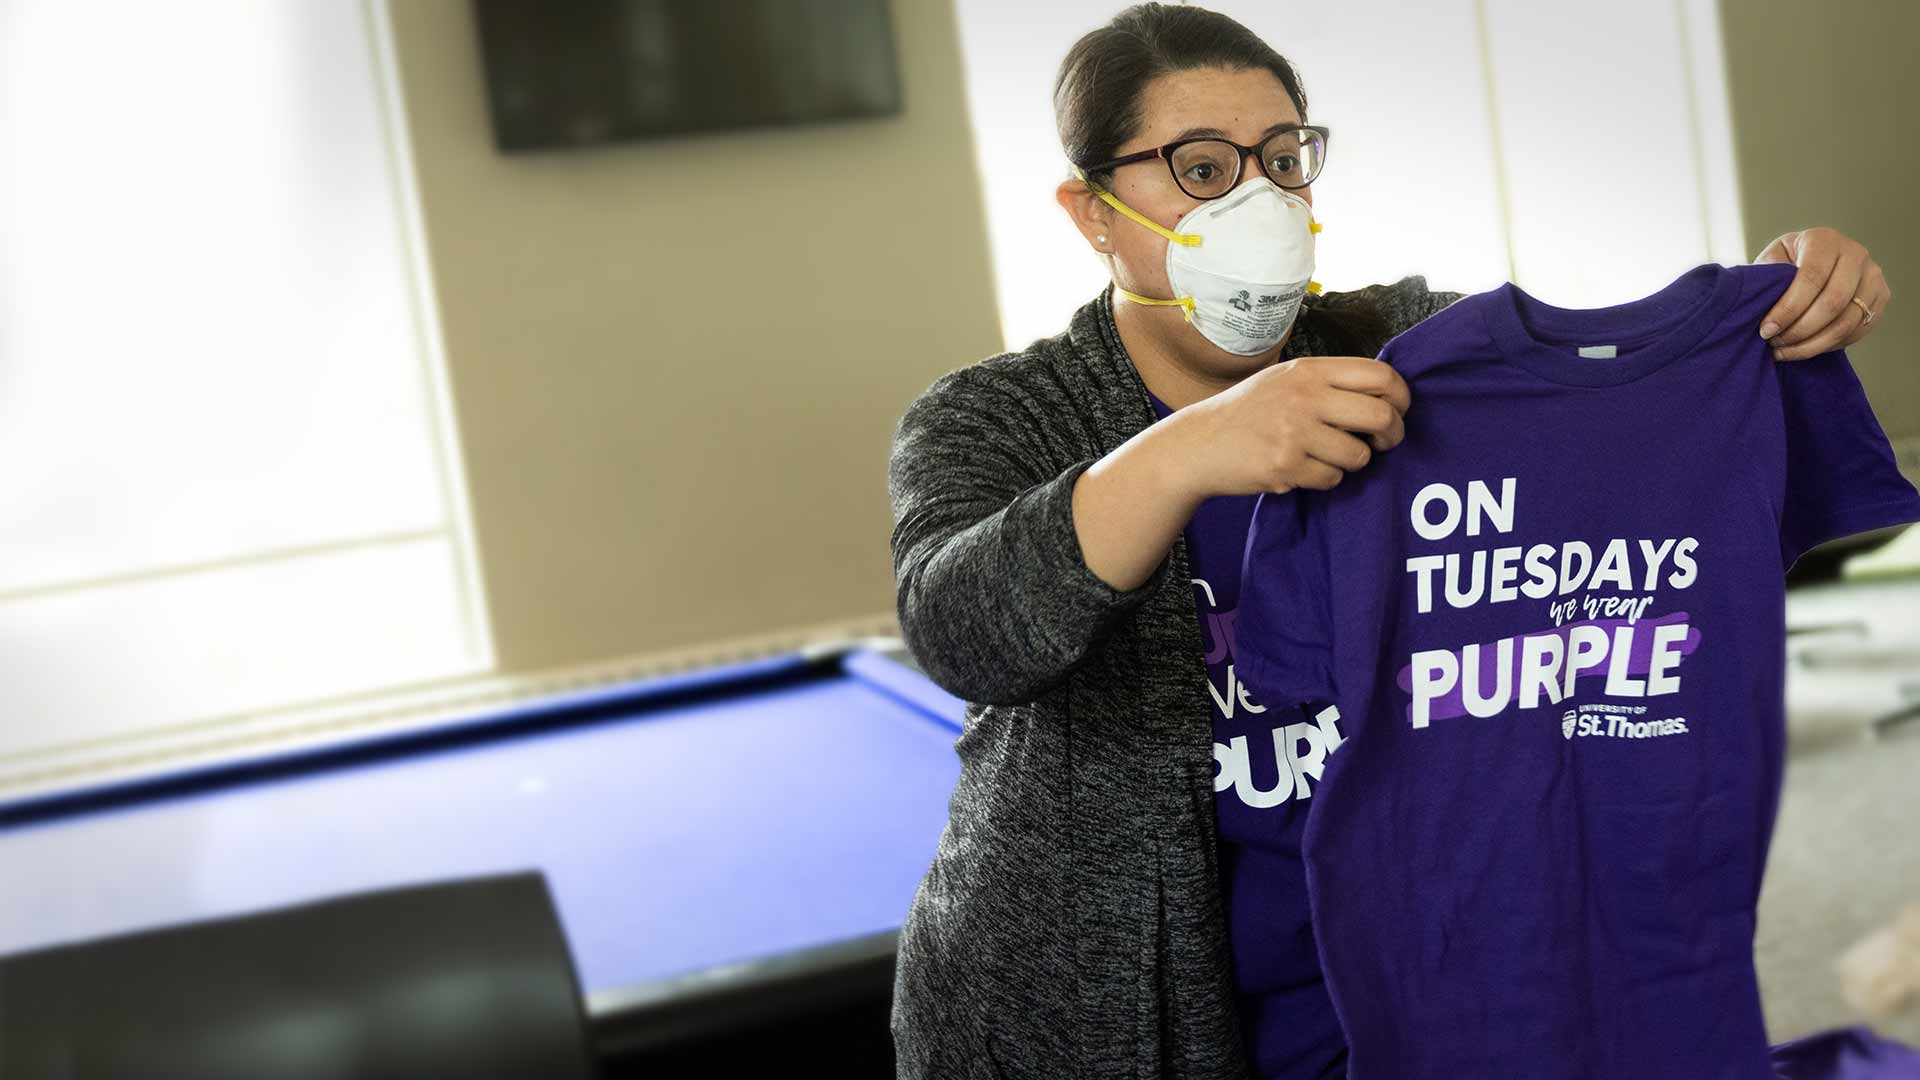 Staff handing out purple shirts